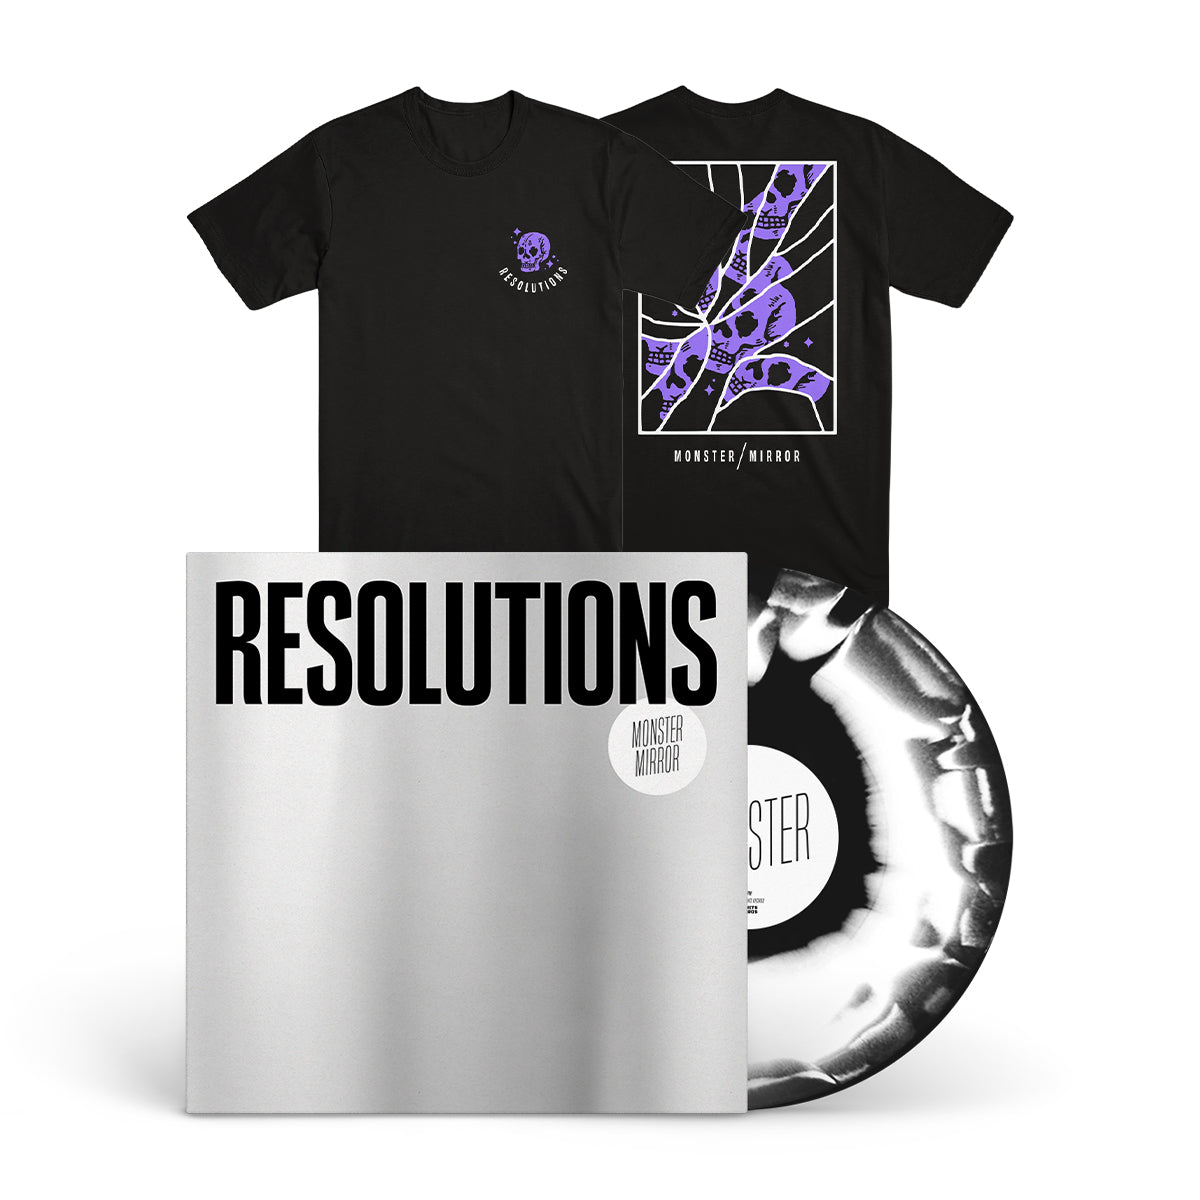 RESOLUTIONS "Monster Mirror" LP + T-Shirt Bundle